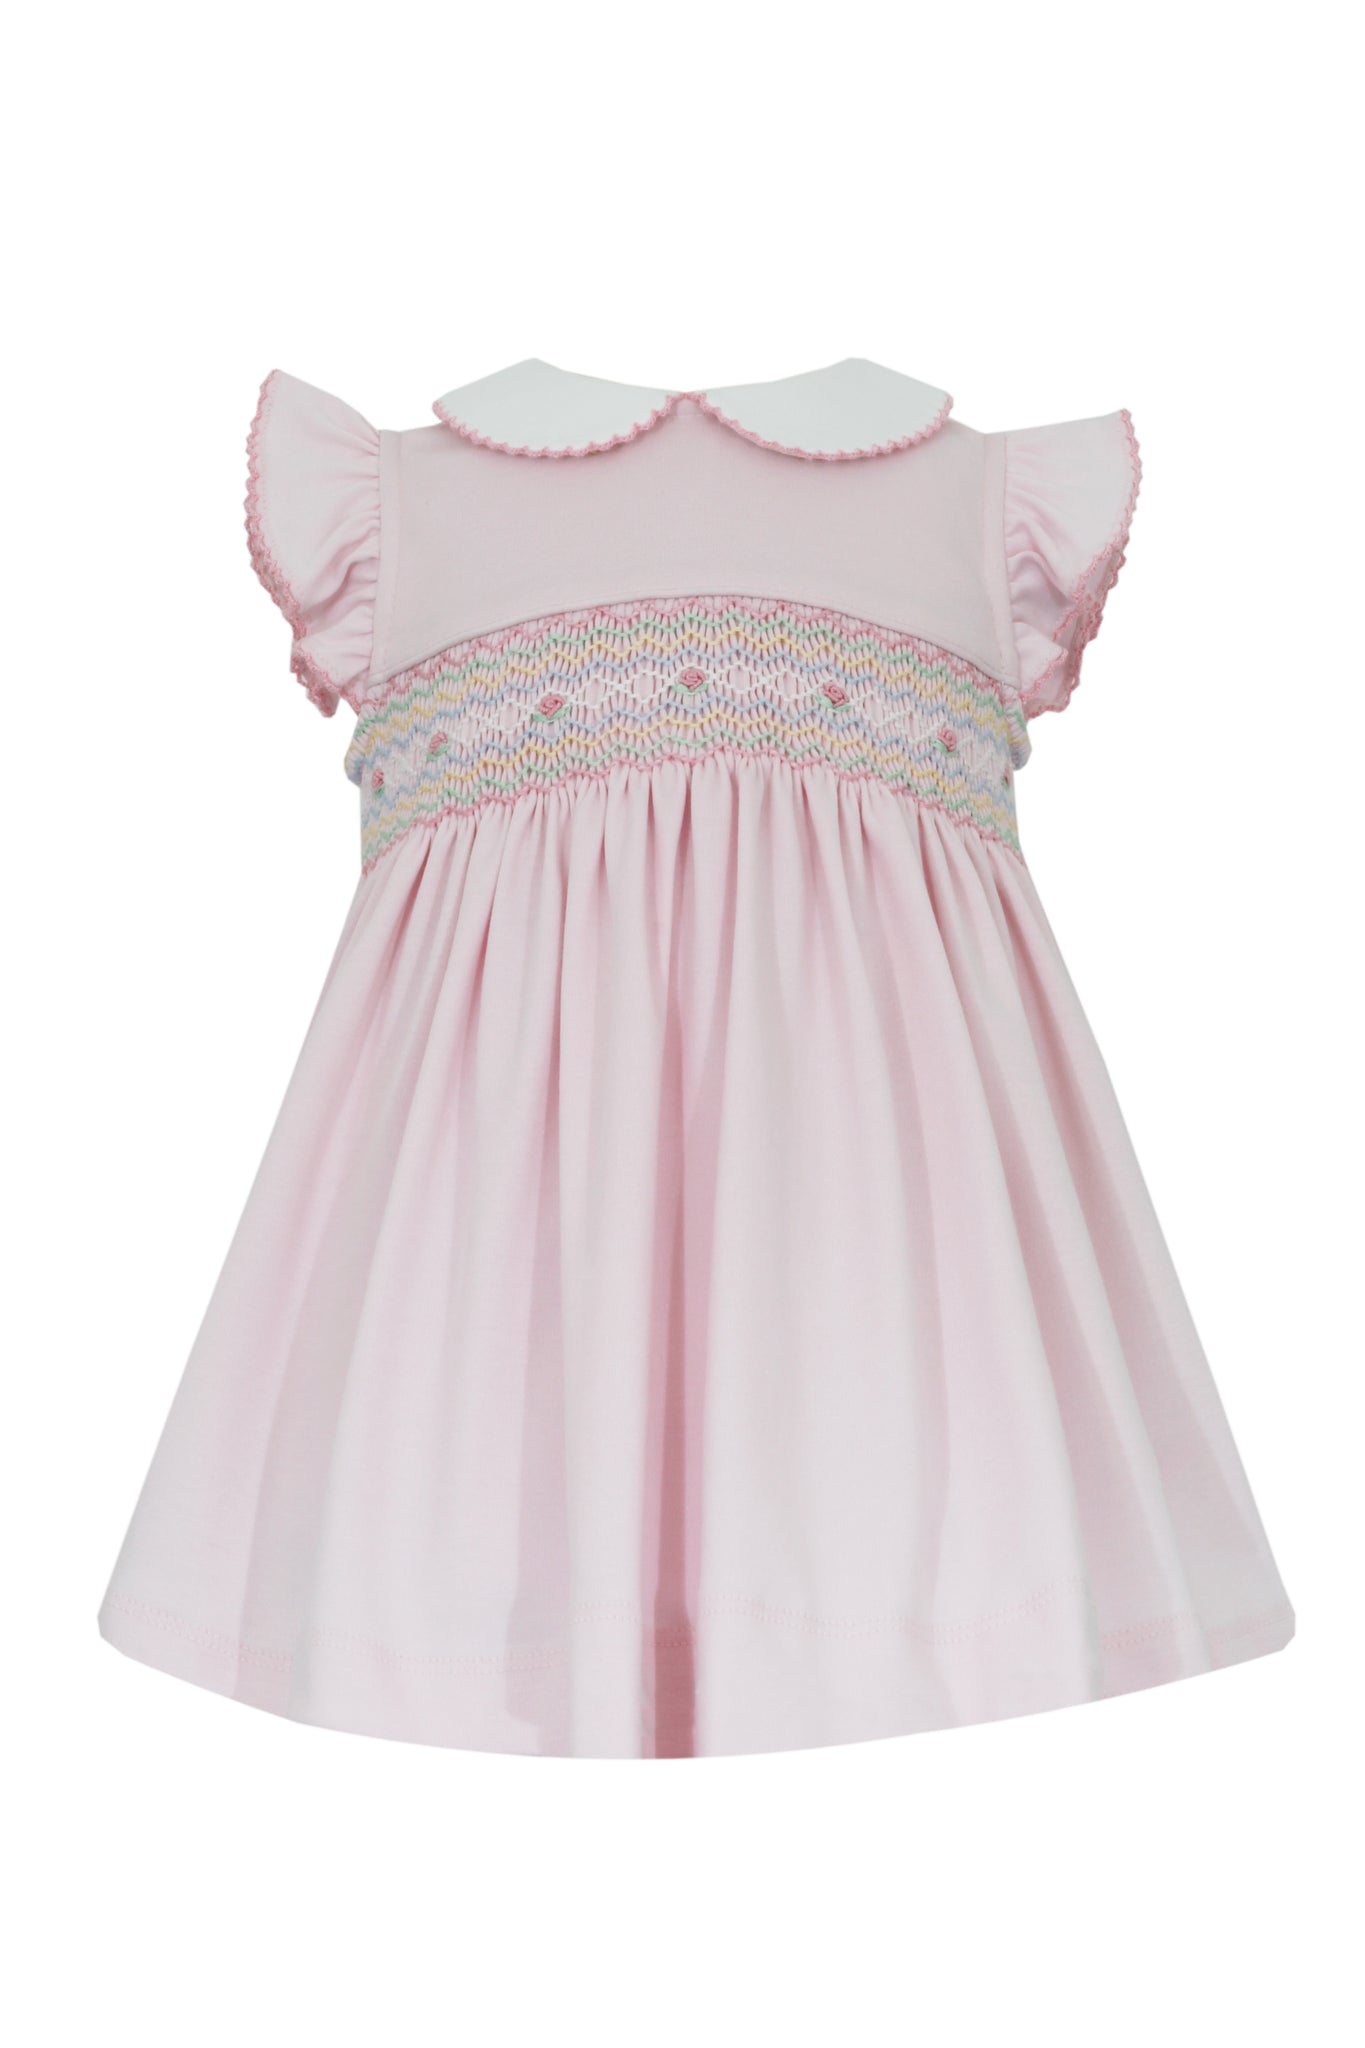 Riley Pink Knit Dress (24M)